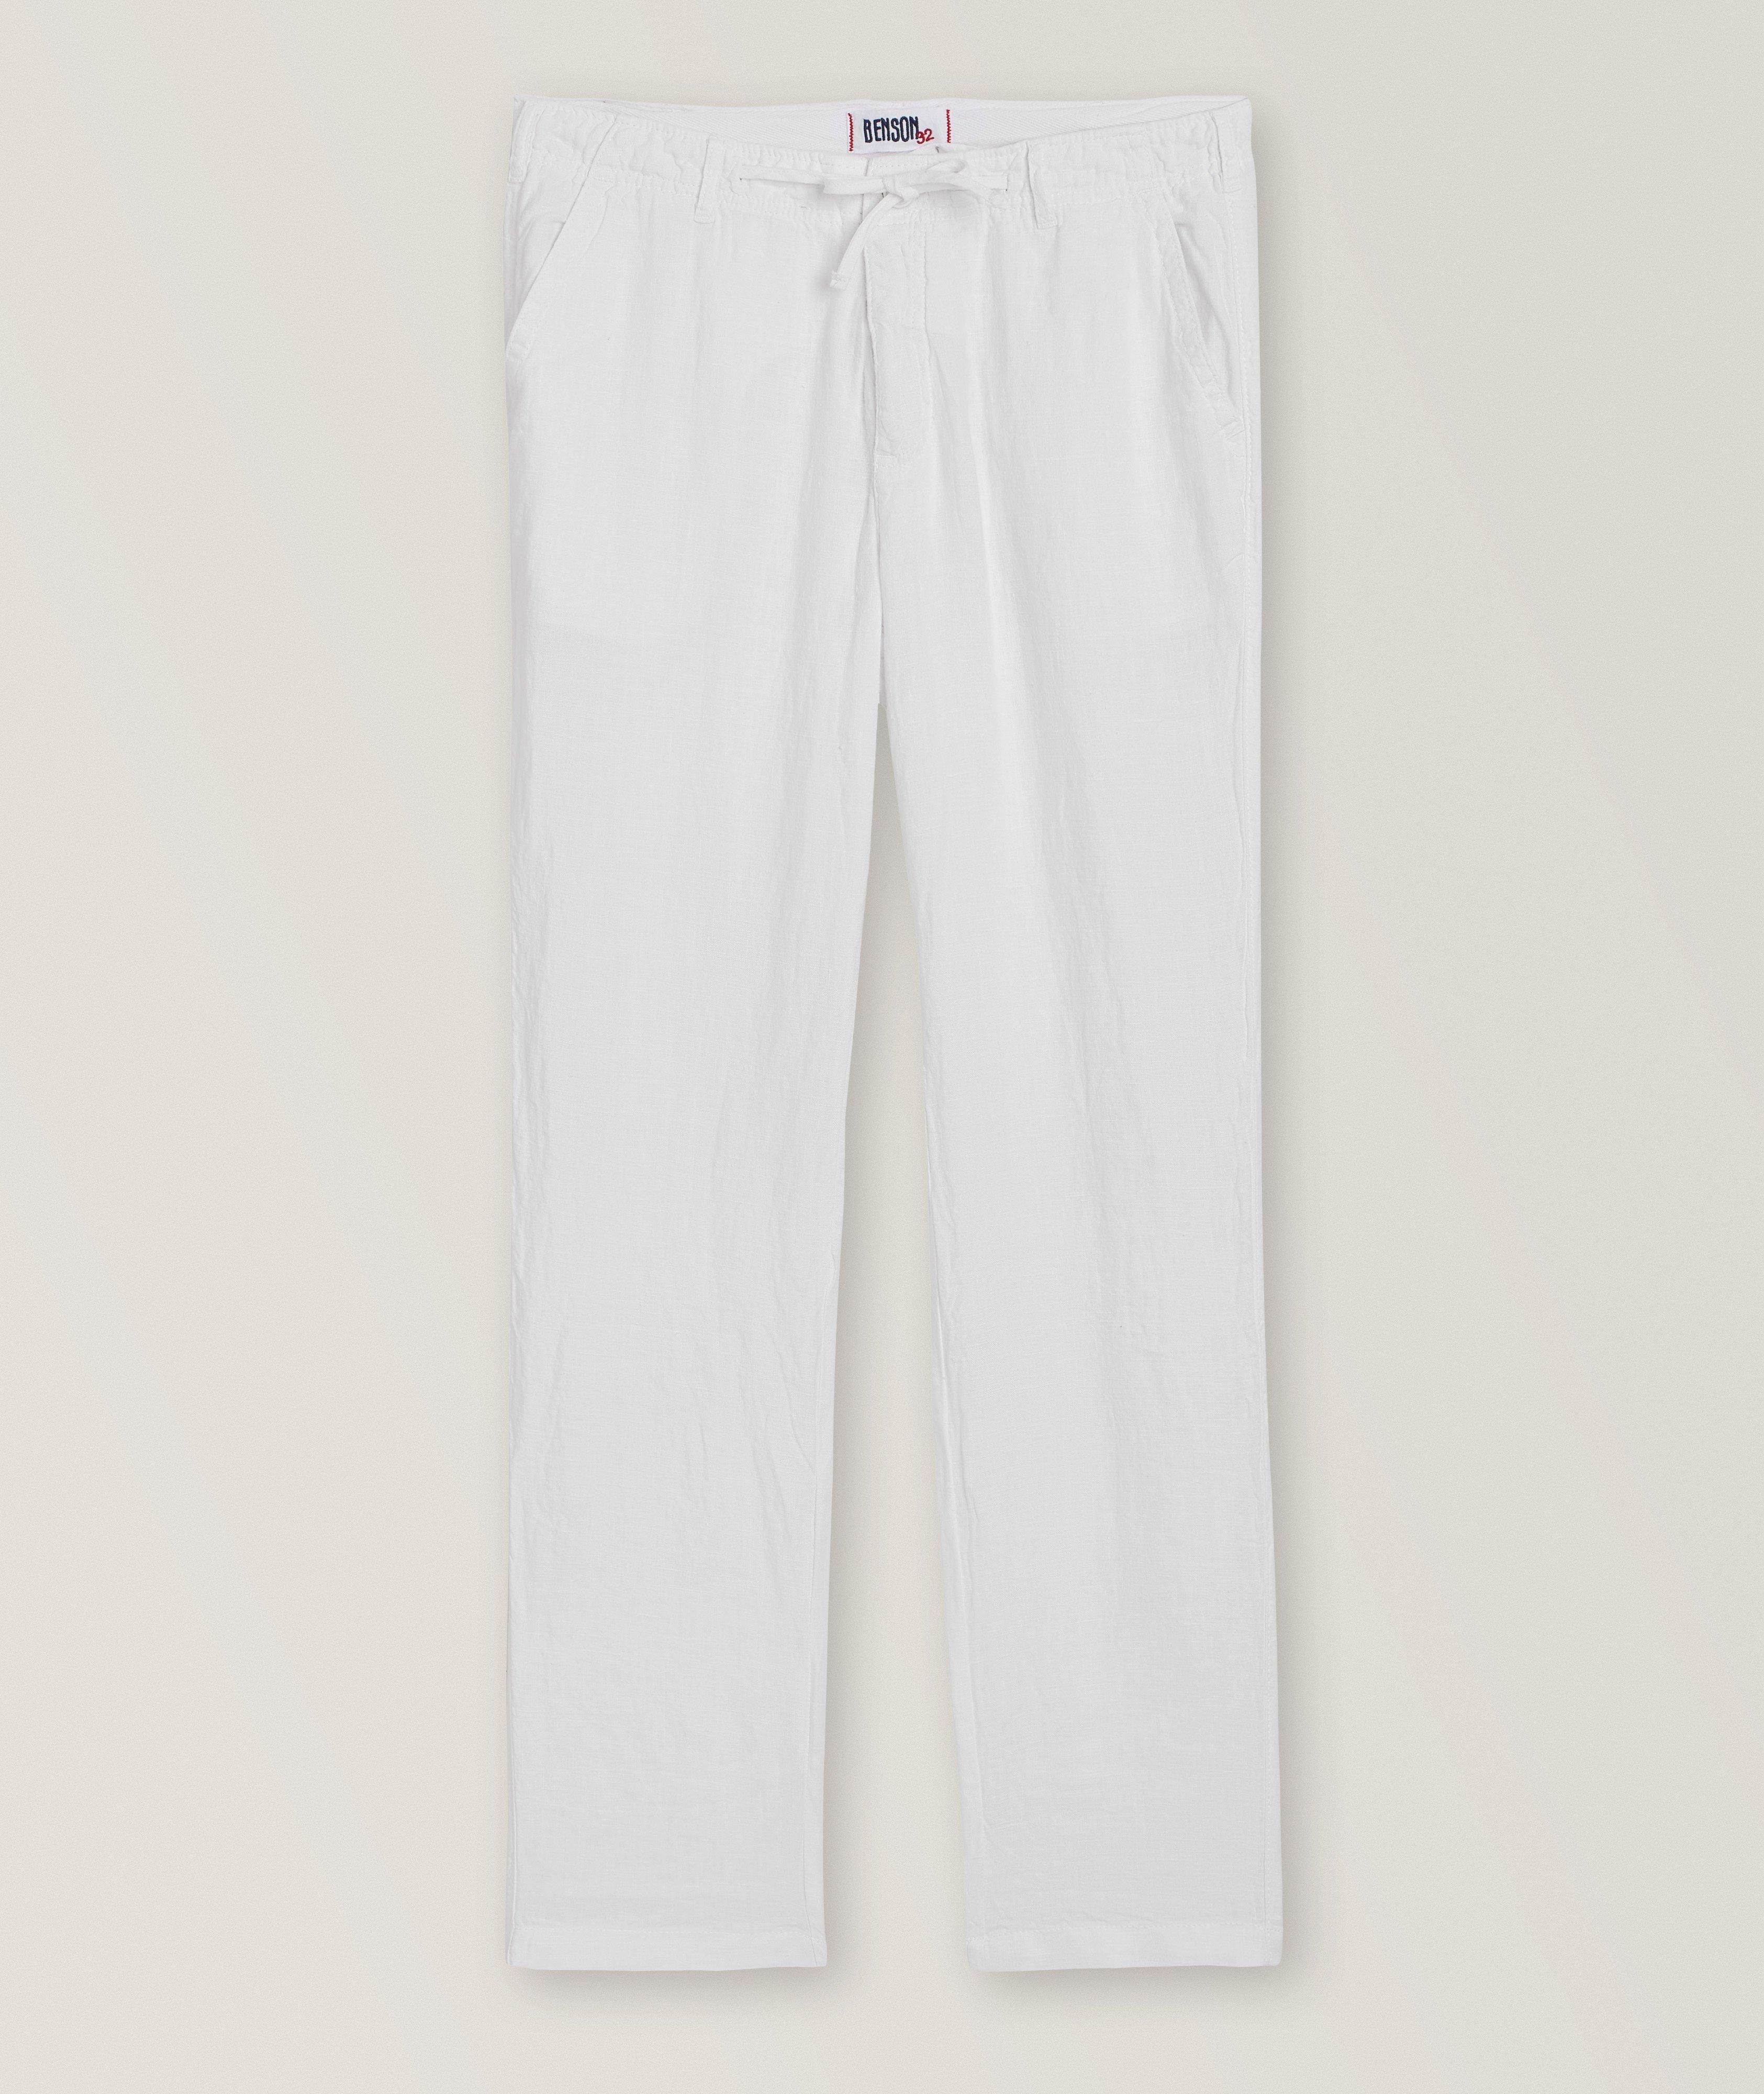 Benson Contemporary Fit Garment Dyed Linen Pants